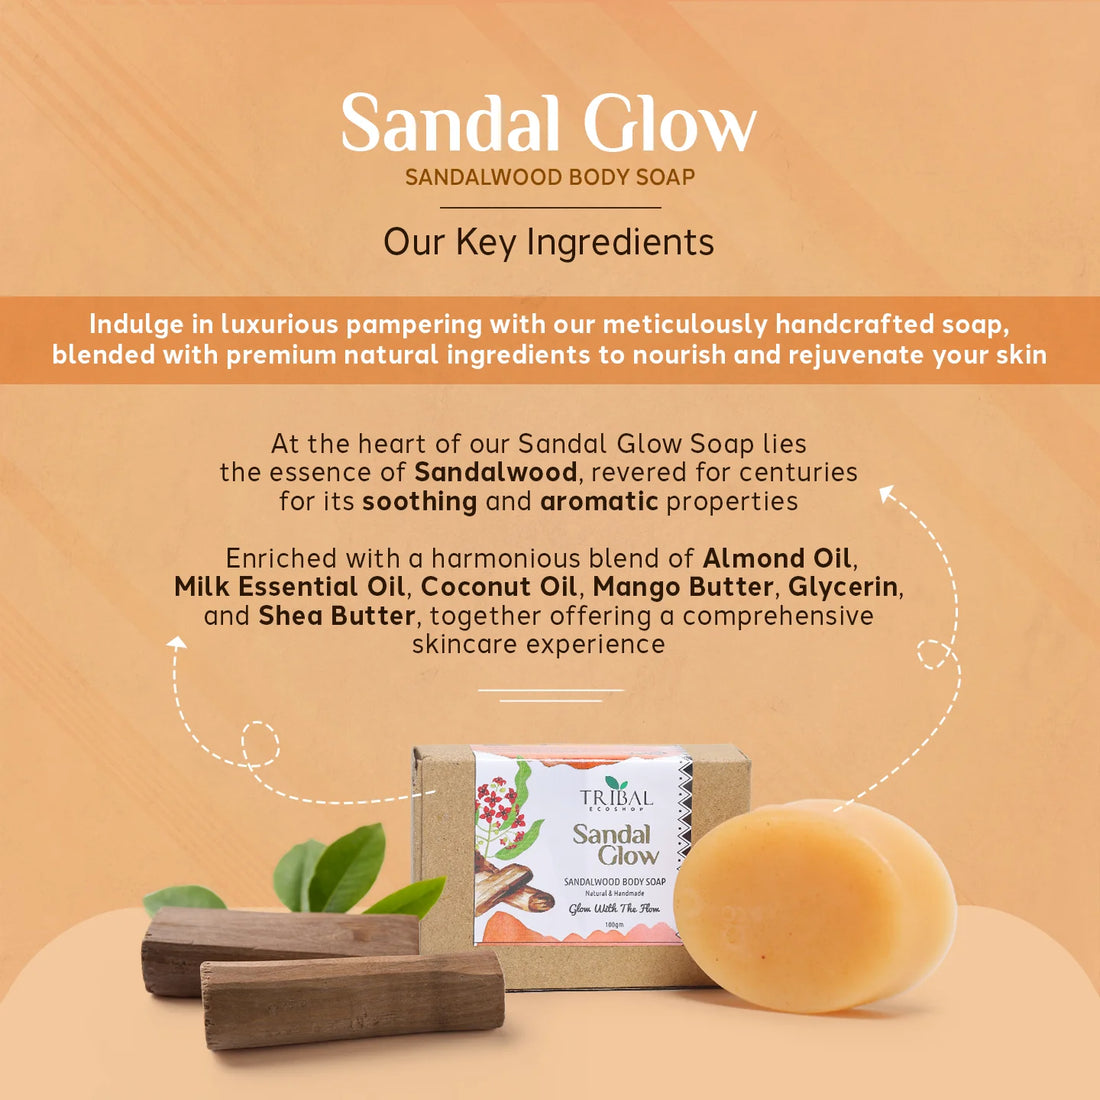 Sandal Glow (Sandalwood Body Soap) 100g